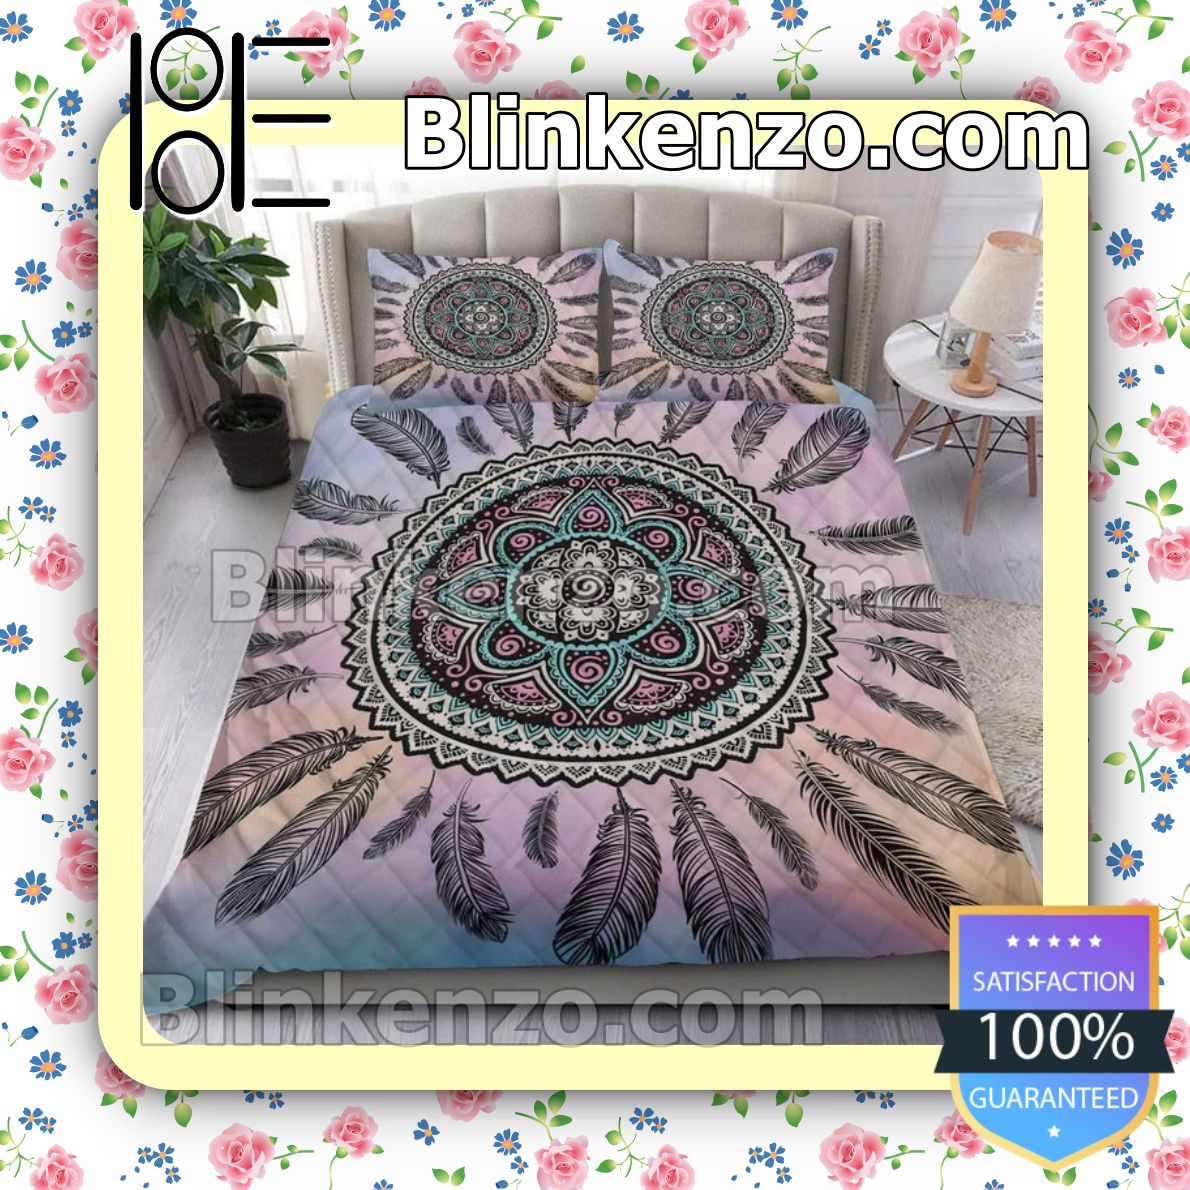 The cheapest Peace Circle Dream Catcher Mandala Queen Bed Set